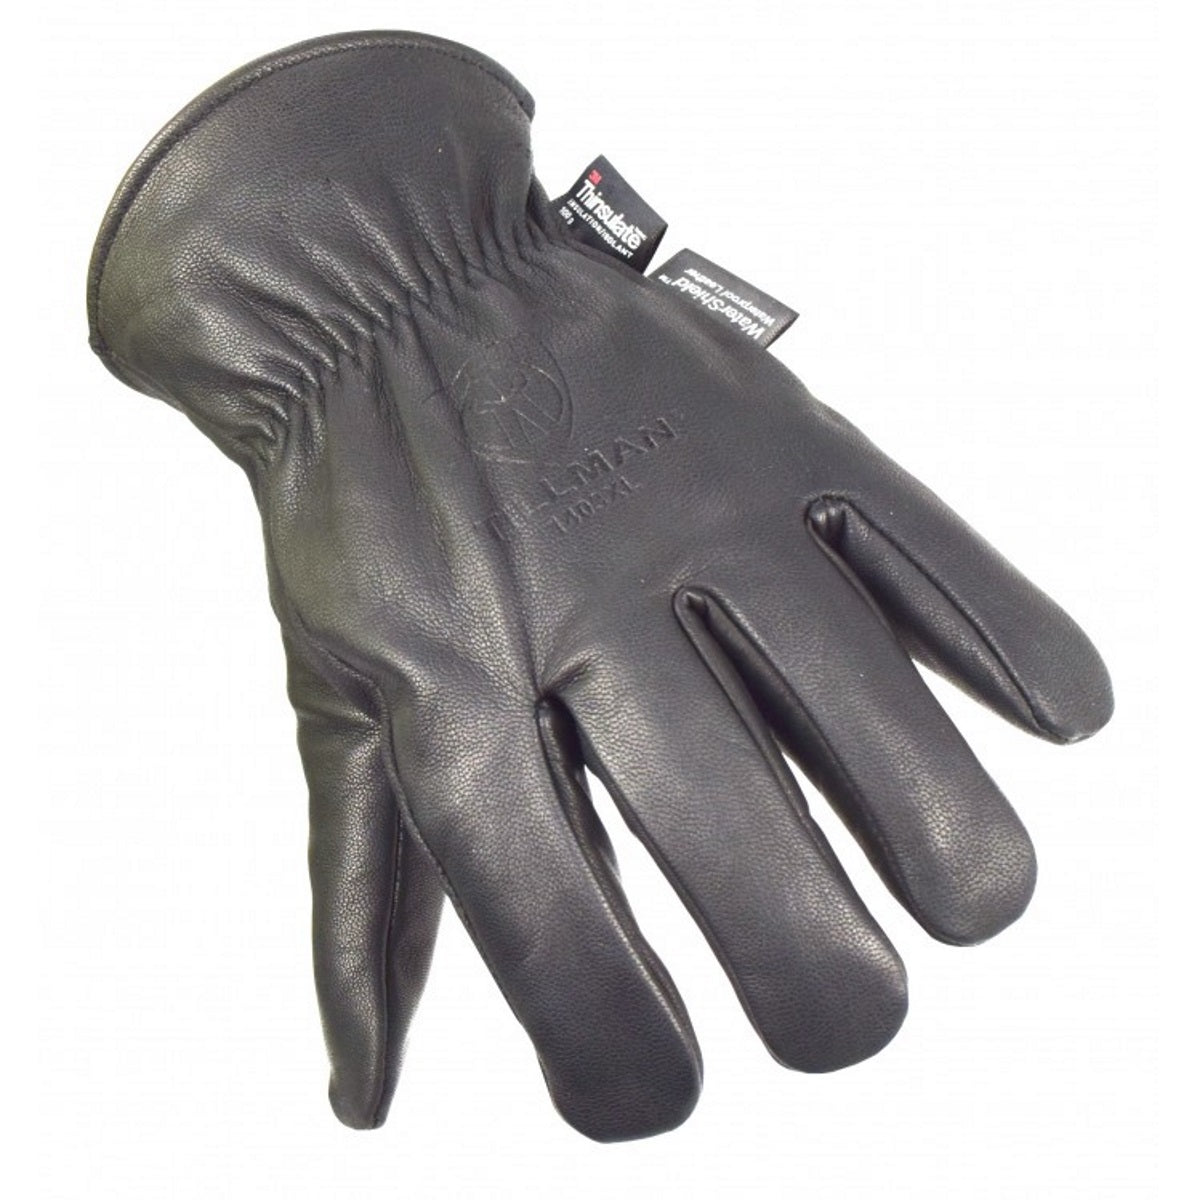 Tillman 1403 Leather Winter Drivers Gloves